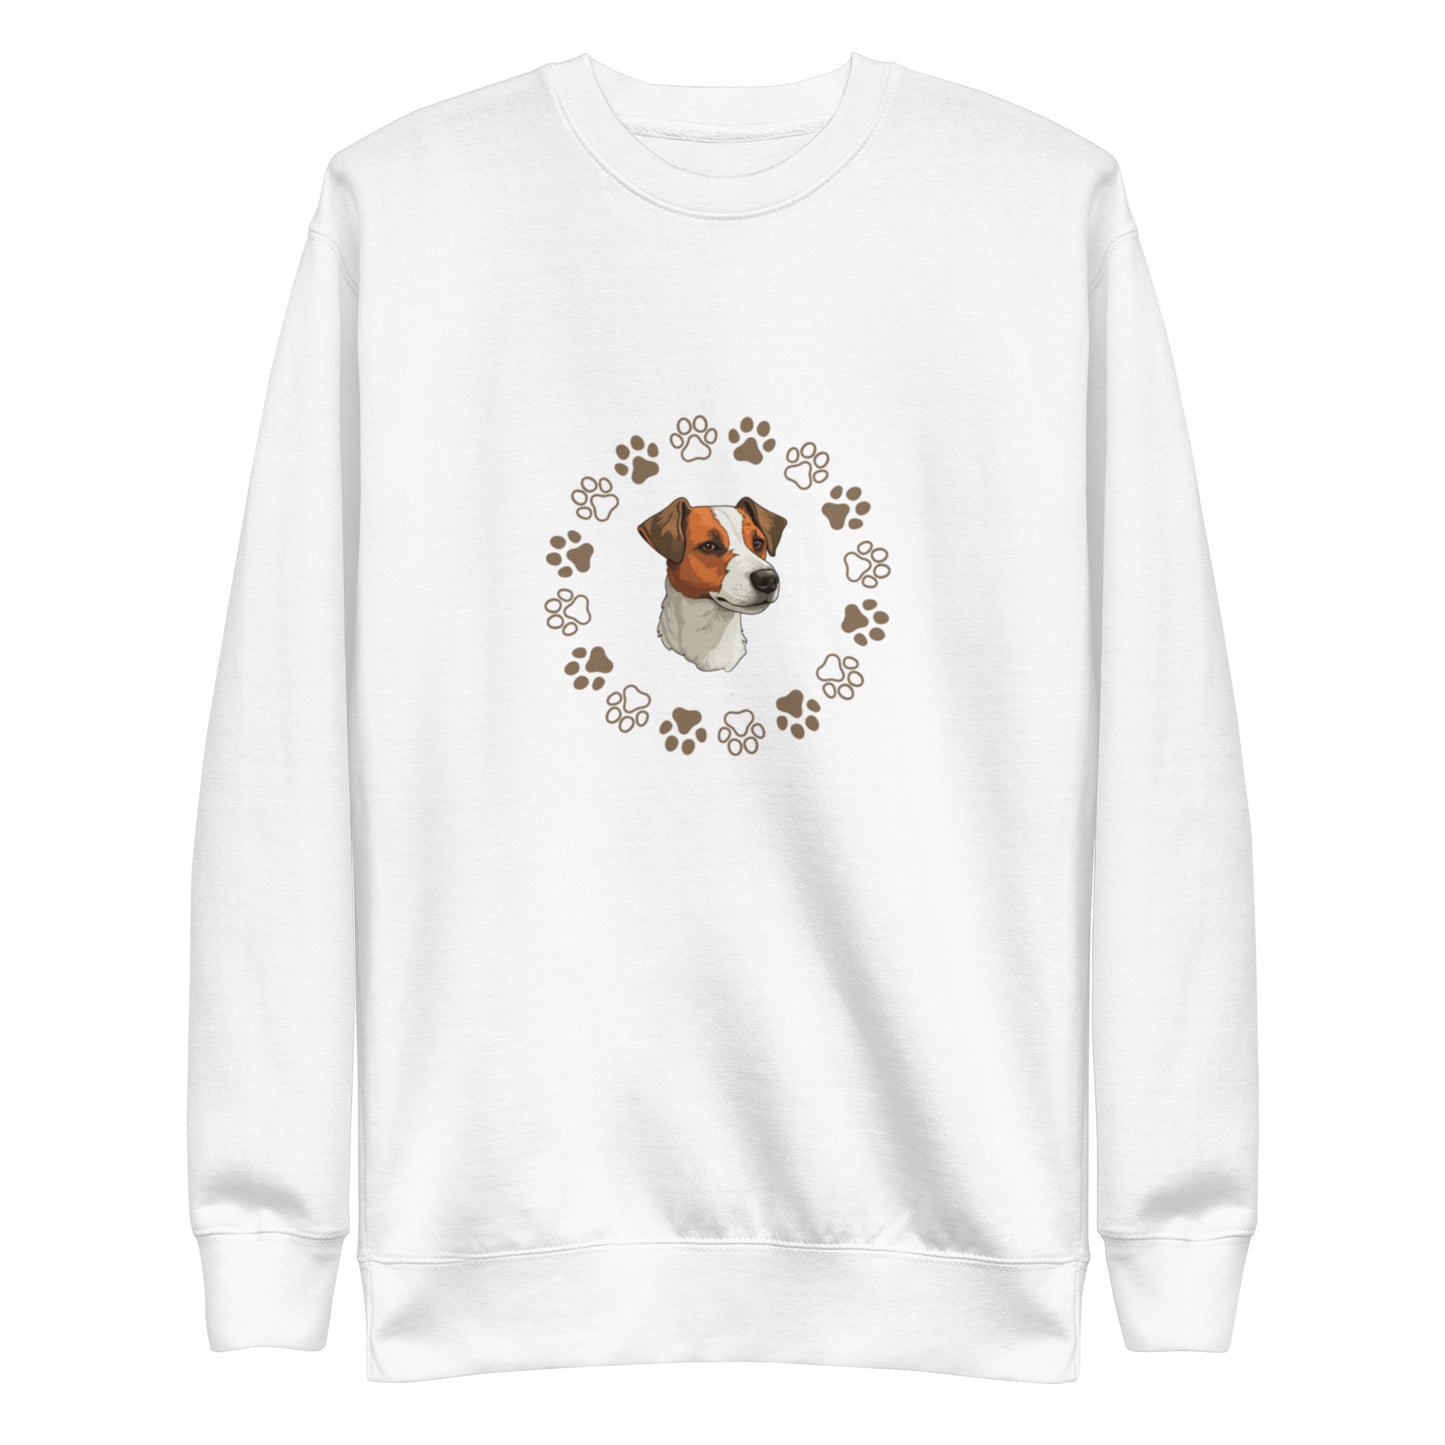 Unisex Premium Sweatshirt / Dog lovers gift / Gift for dog lovers / Terrier lover gifts